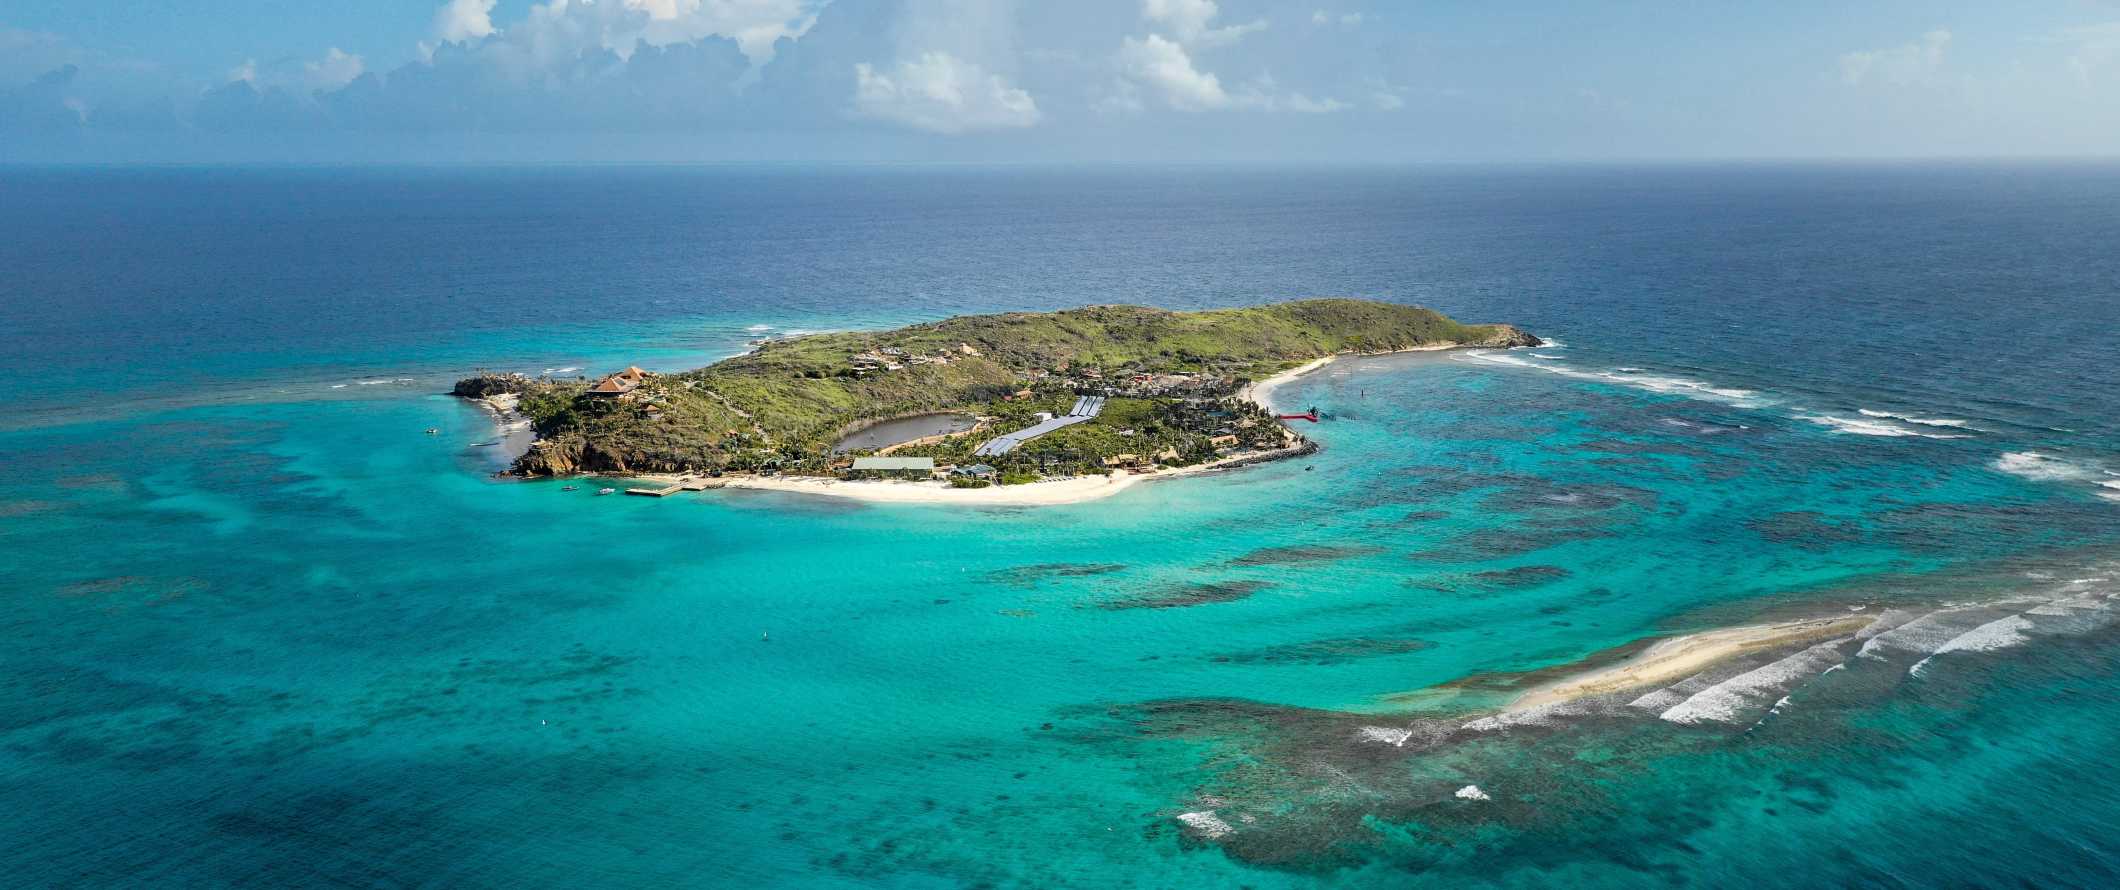 Aerial view of Necker Island in the British Virgin Islands